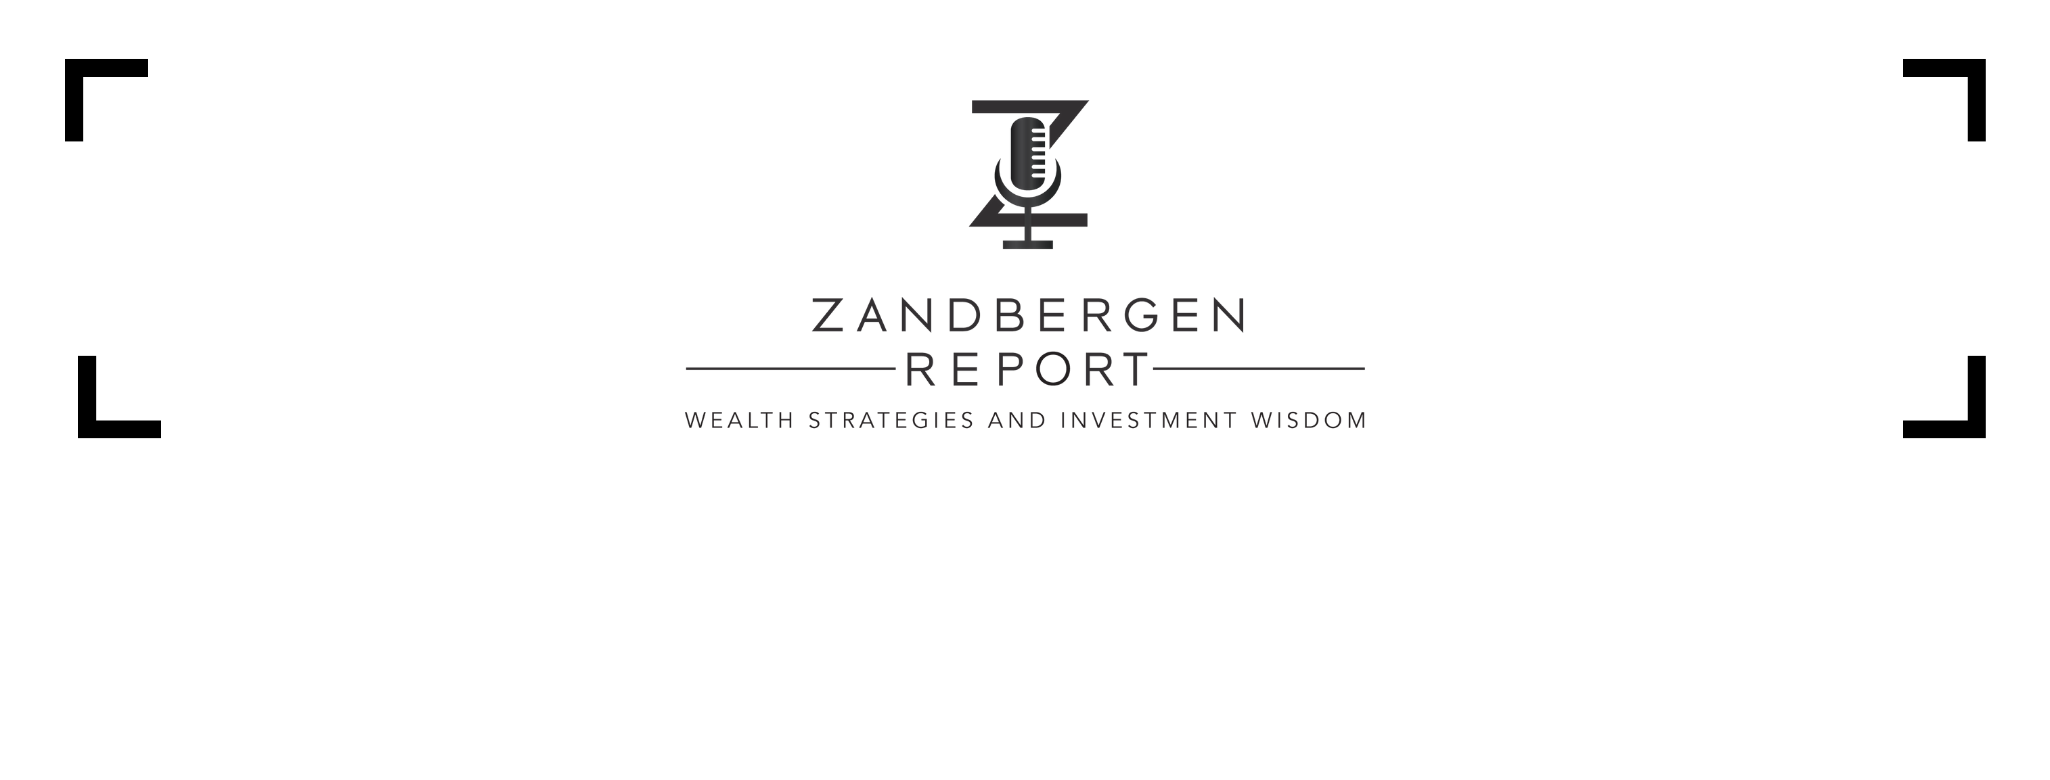 The Zandbergen Report